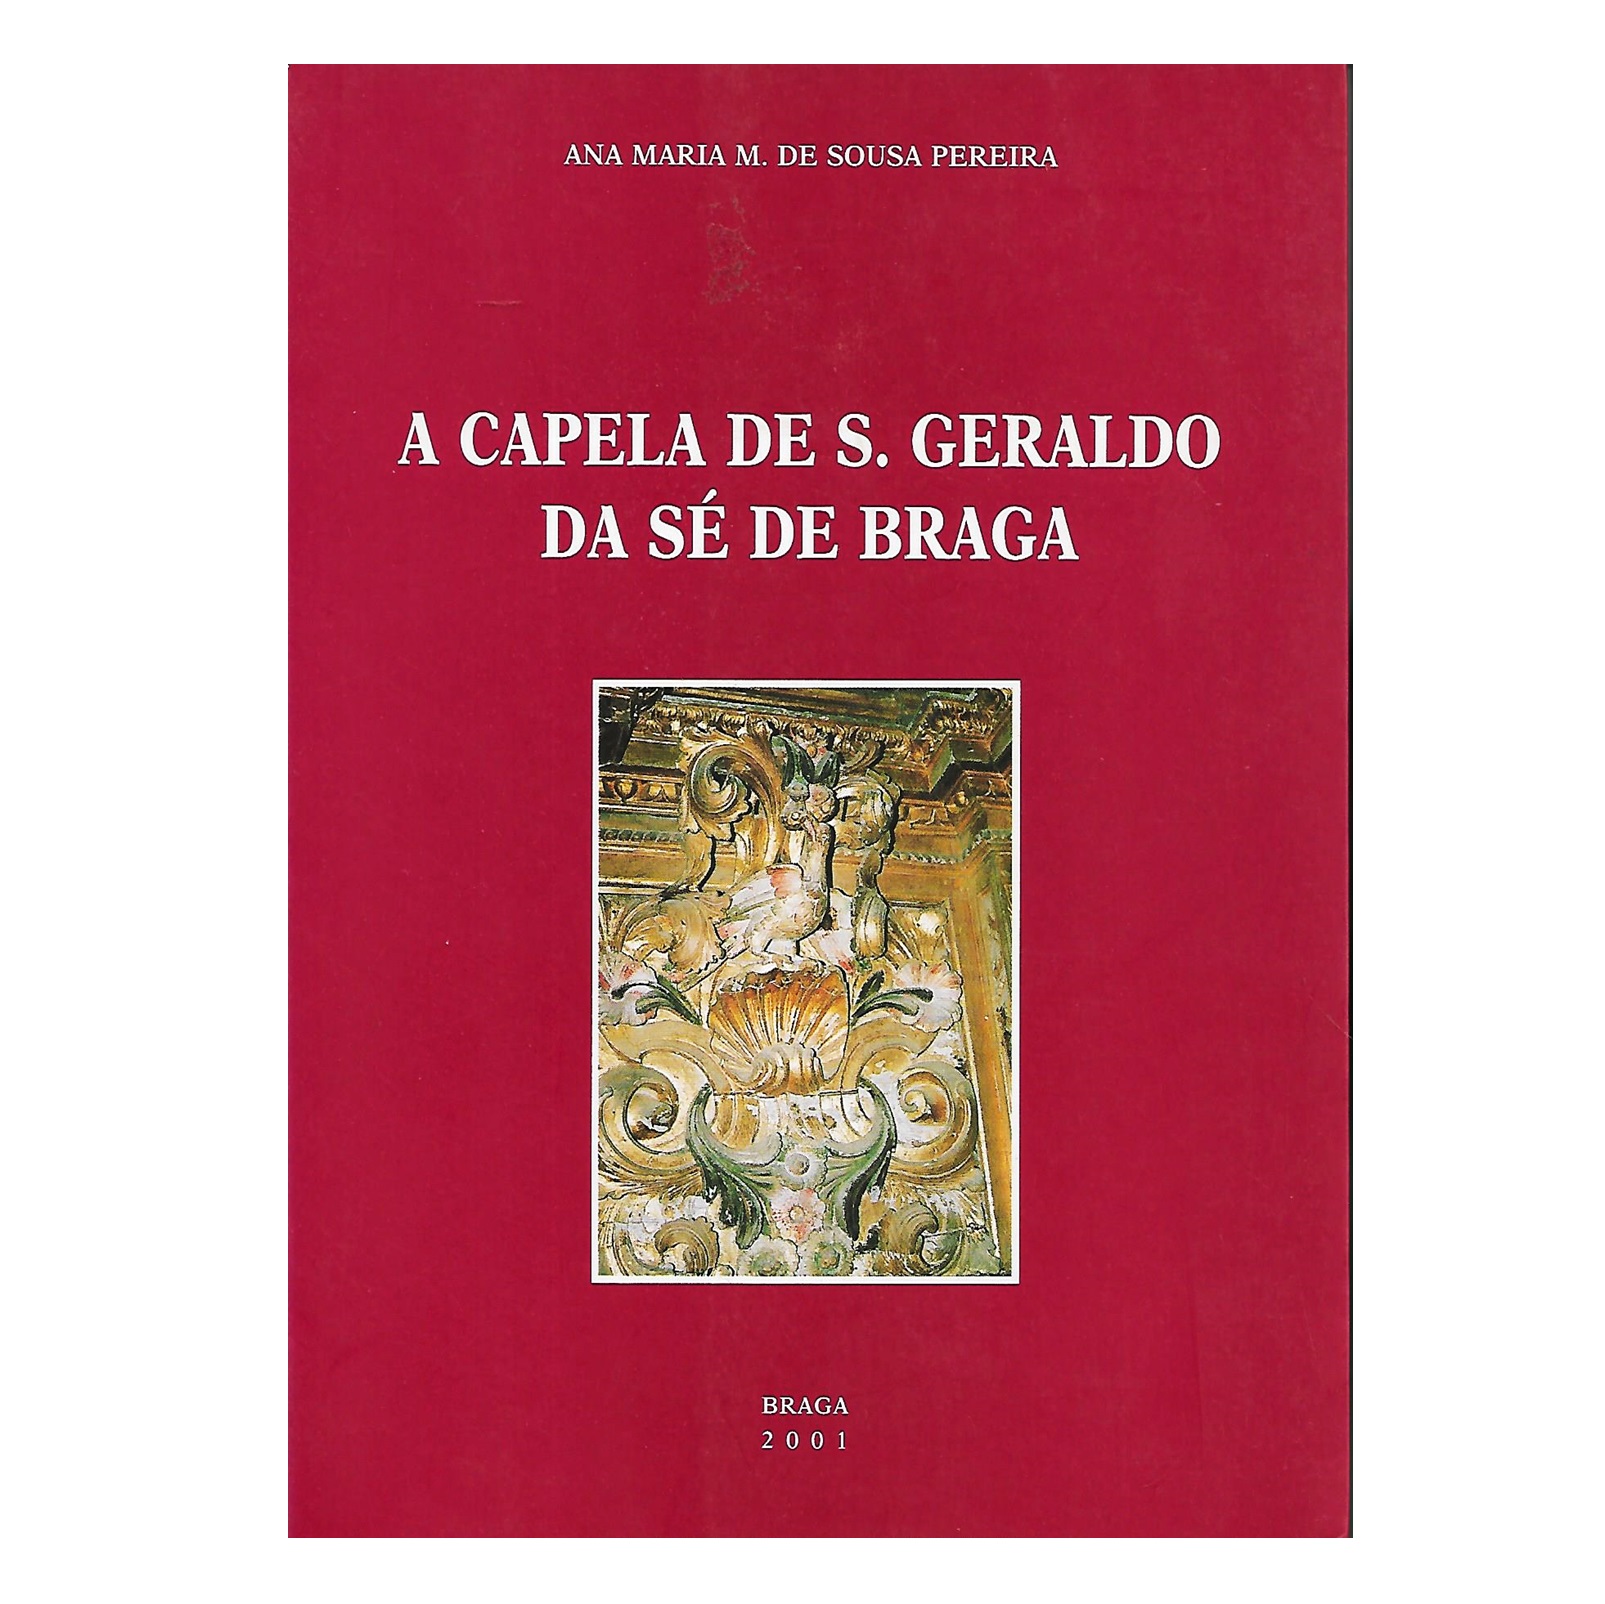 A CAPELA DE S. GERALDO DA SÉ DE BRAGA